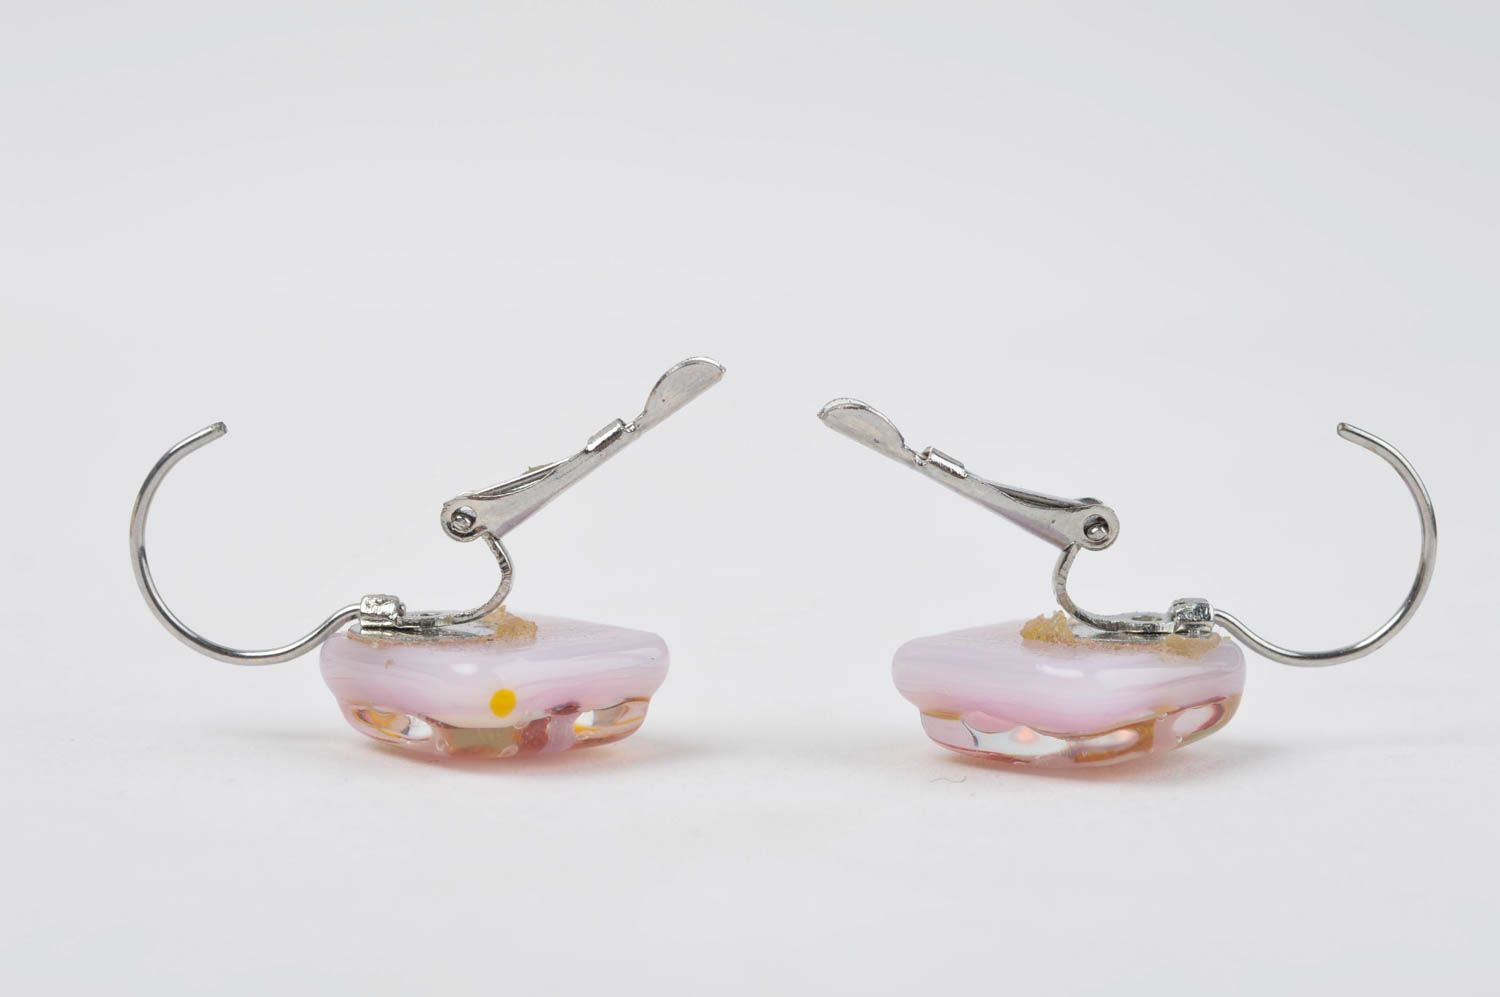 Unusual handmade glass earrings artisan jewelry designs accessories for girls photo 3